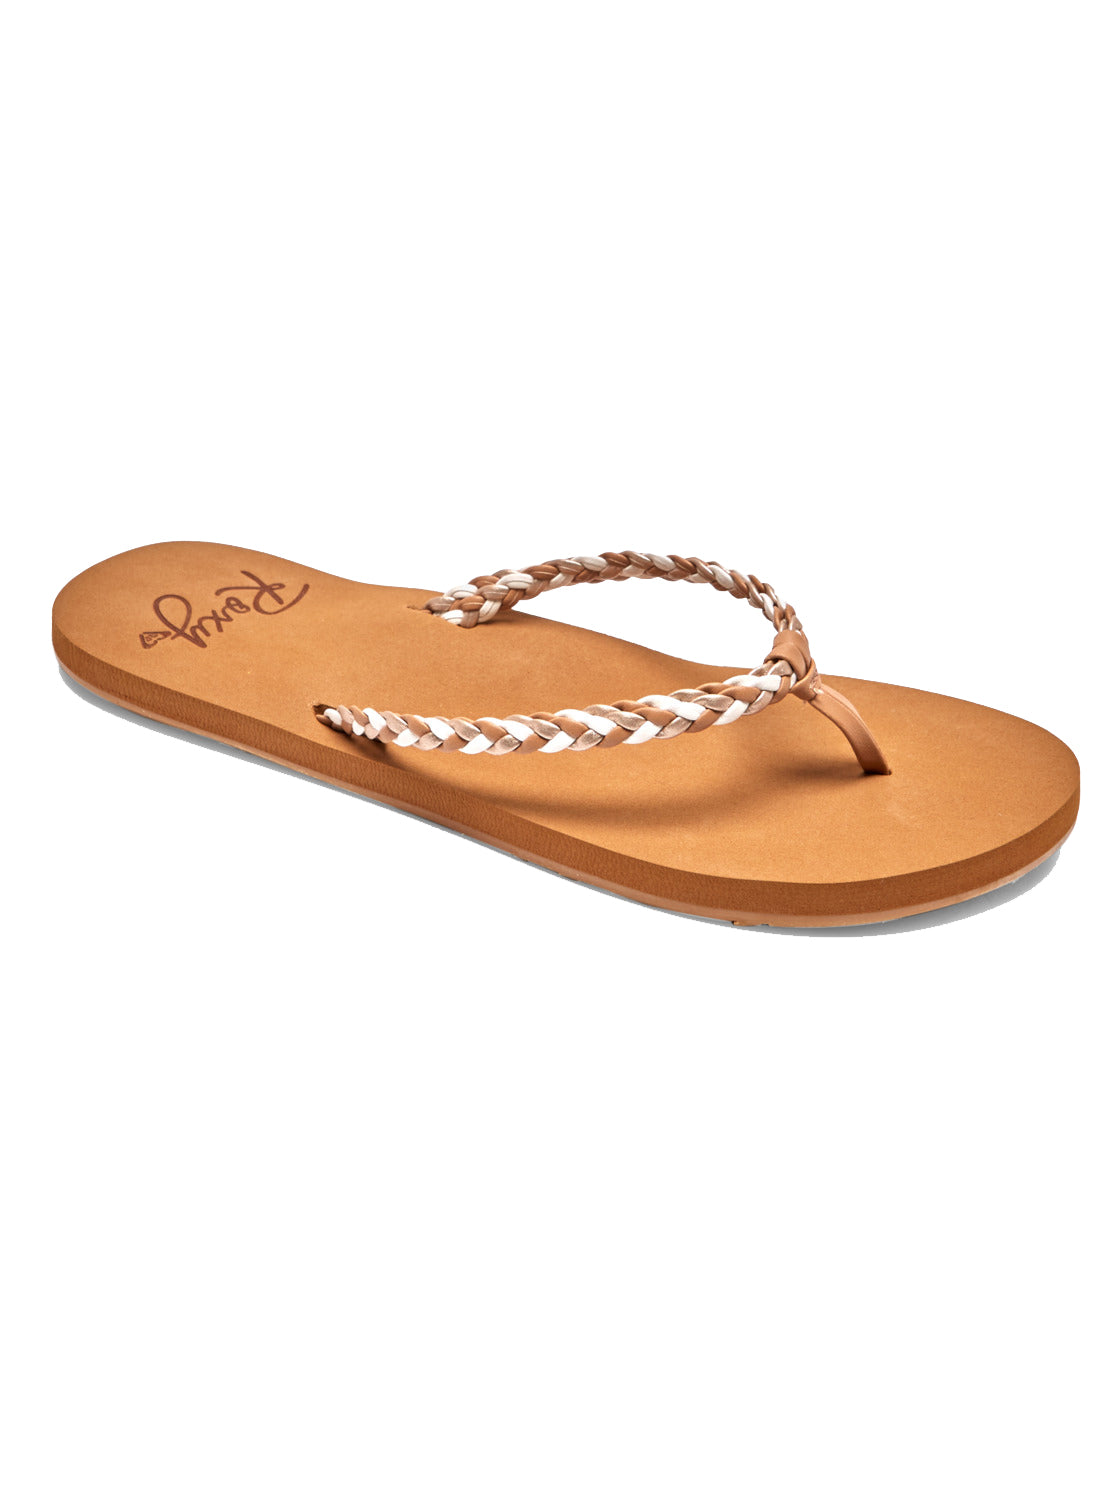 Roxy Costas Womens Sandal TG1-Tan-Gold 11